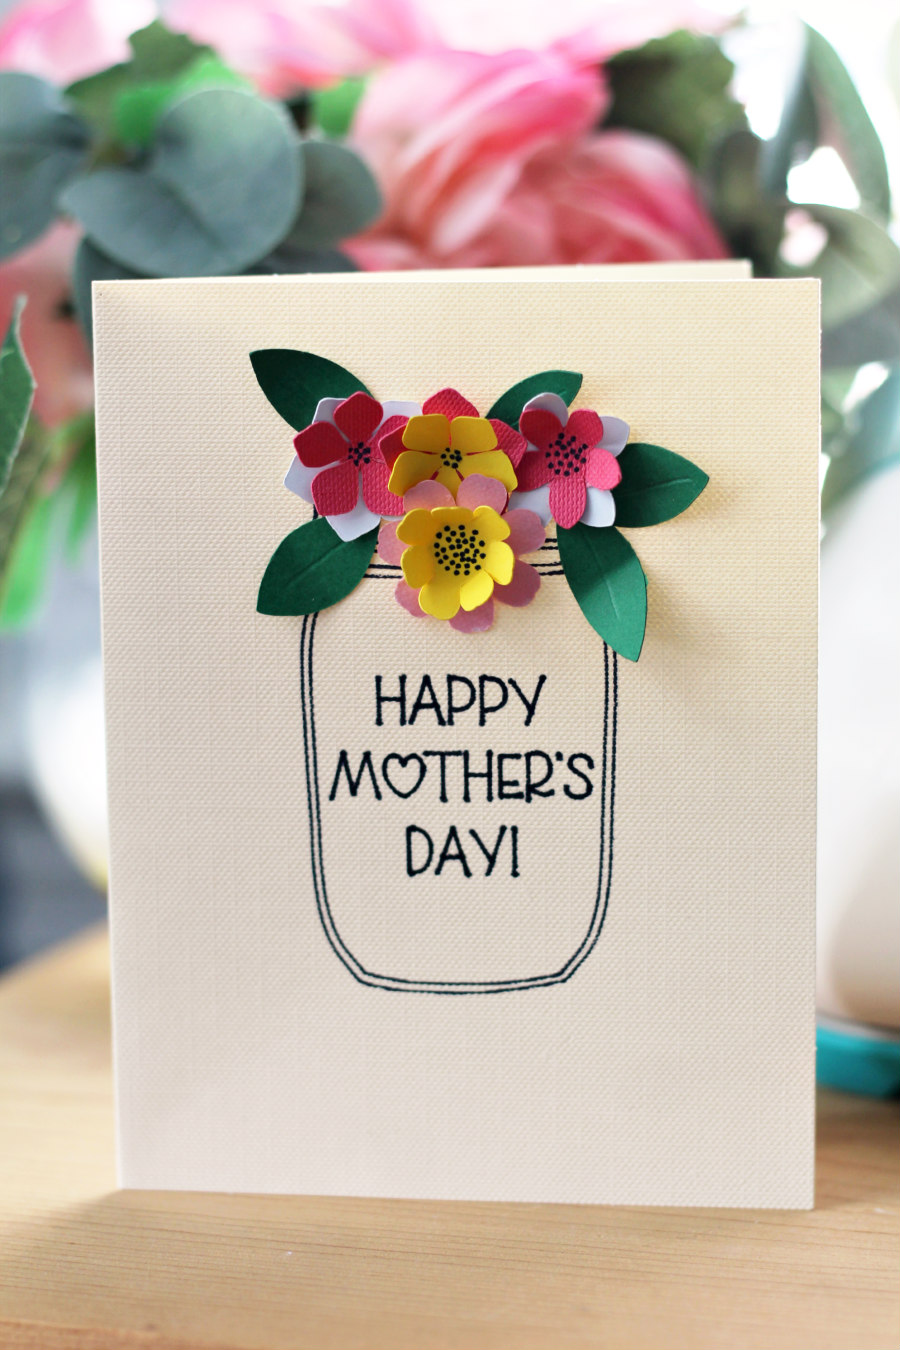 3D Mother's Day Card made with the Cricut Joy, cardstock, and a Cricut Joy pen.